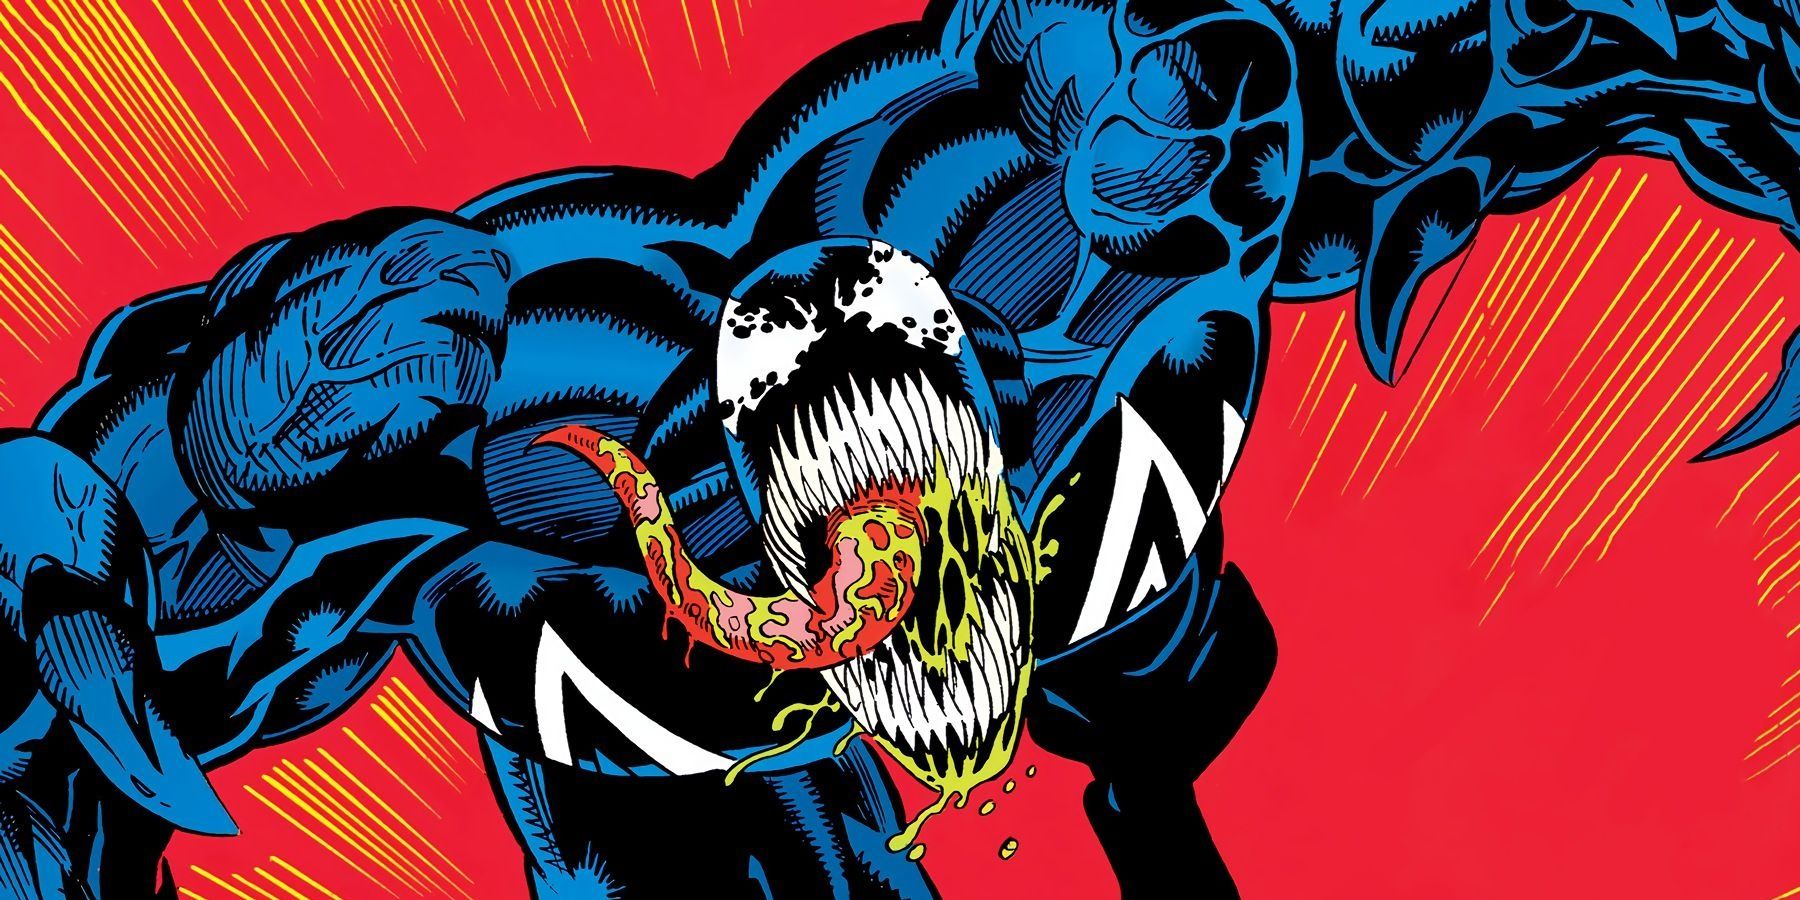 Venom leaps forward in Marvel Comics